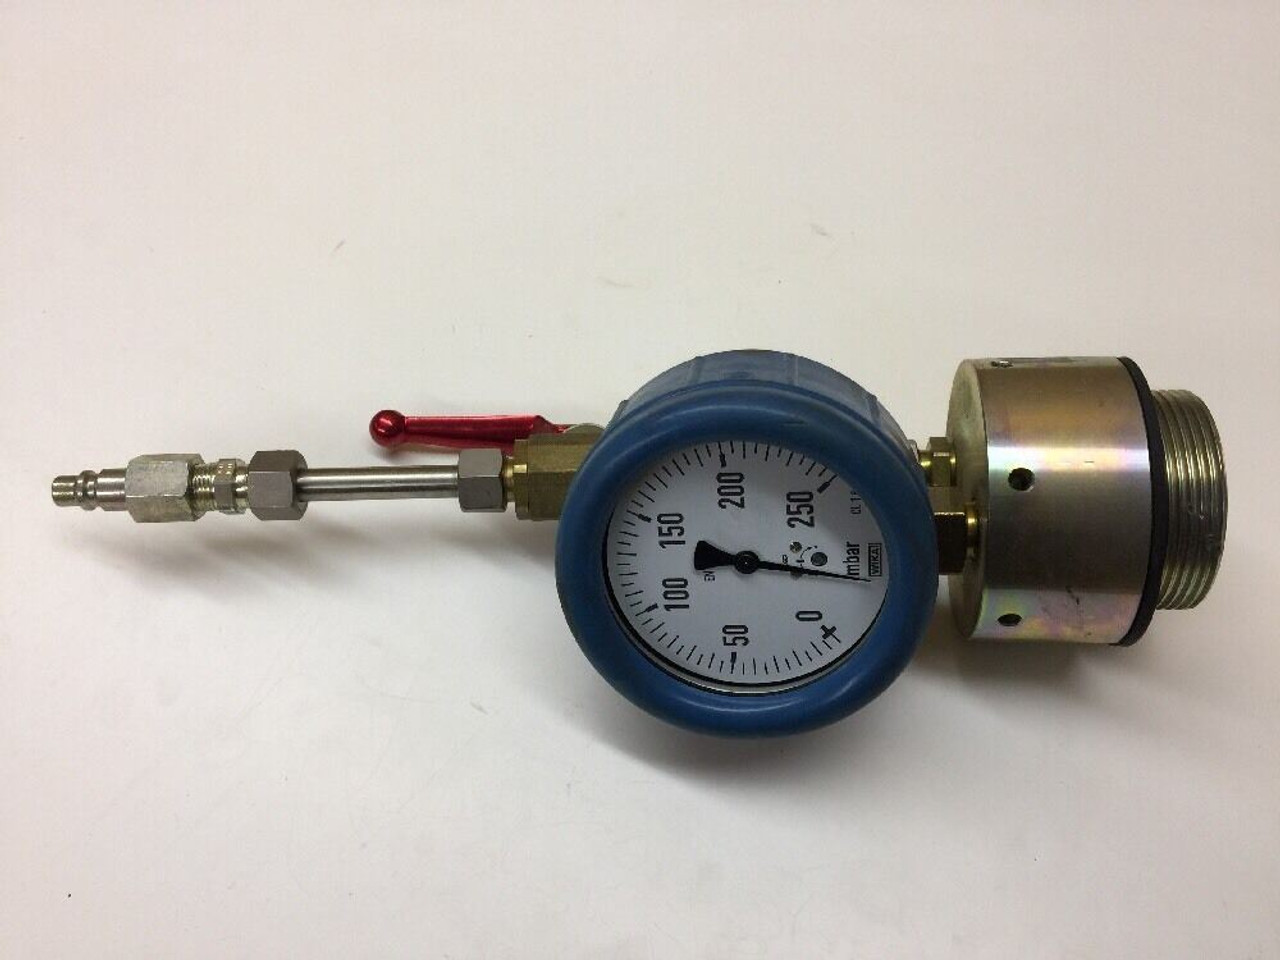 Wika Mbar Diaphragm Pressure Gauge & Valve EN 837-3 0-250